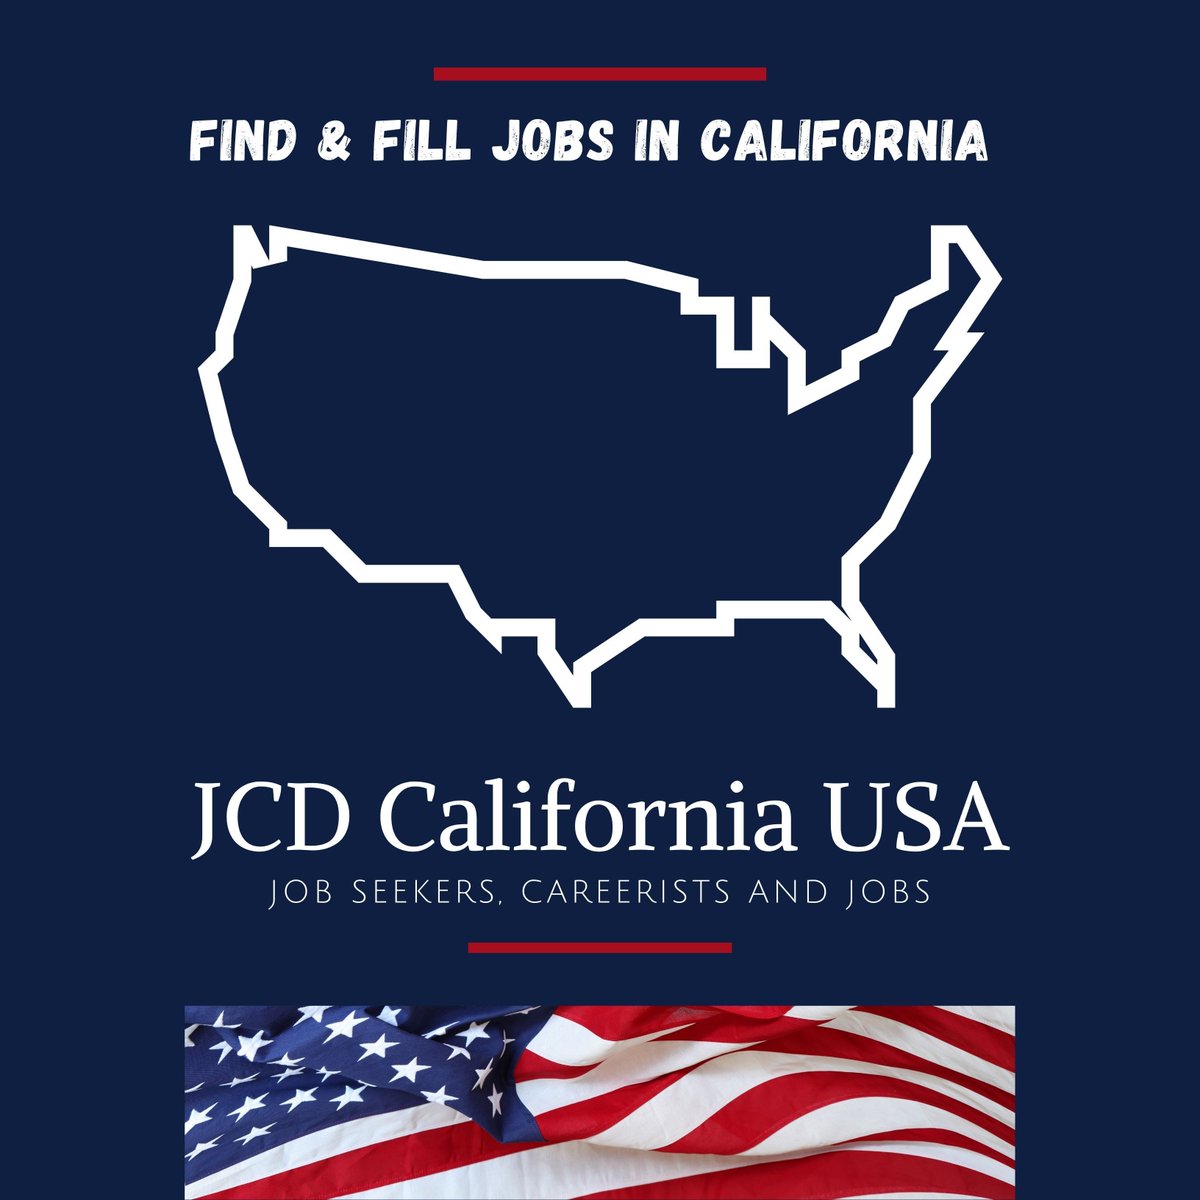 Looking for #jobs or #hiring #Talent in #California? GO HERE buff.ly/3BaBZyo #santarosa #stockton #carlsbad #fremont #gardengrove #missionviejo #sanclemente #sanmateo #santaclara #anaheim #losangelesca #sandiegoca #sacramentoca #sanjoseca #fresnoca #longbeachca #usjobs